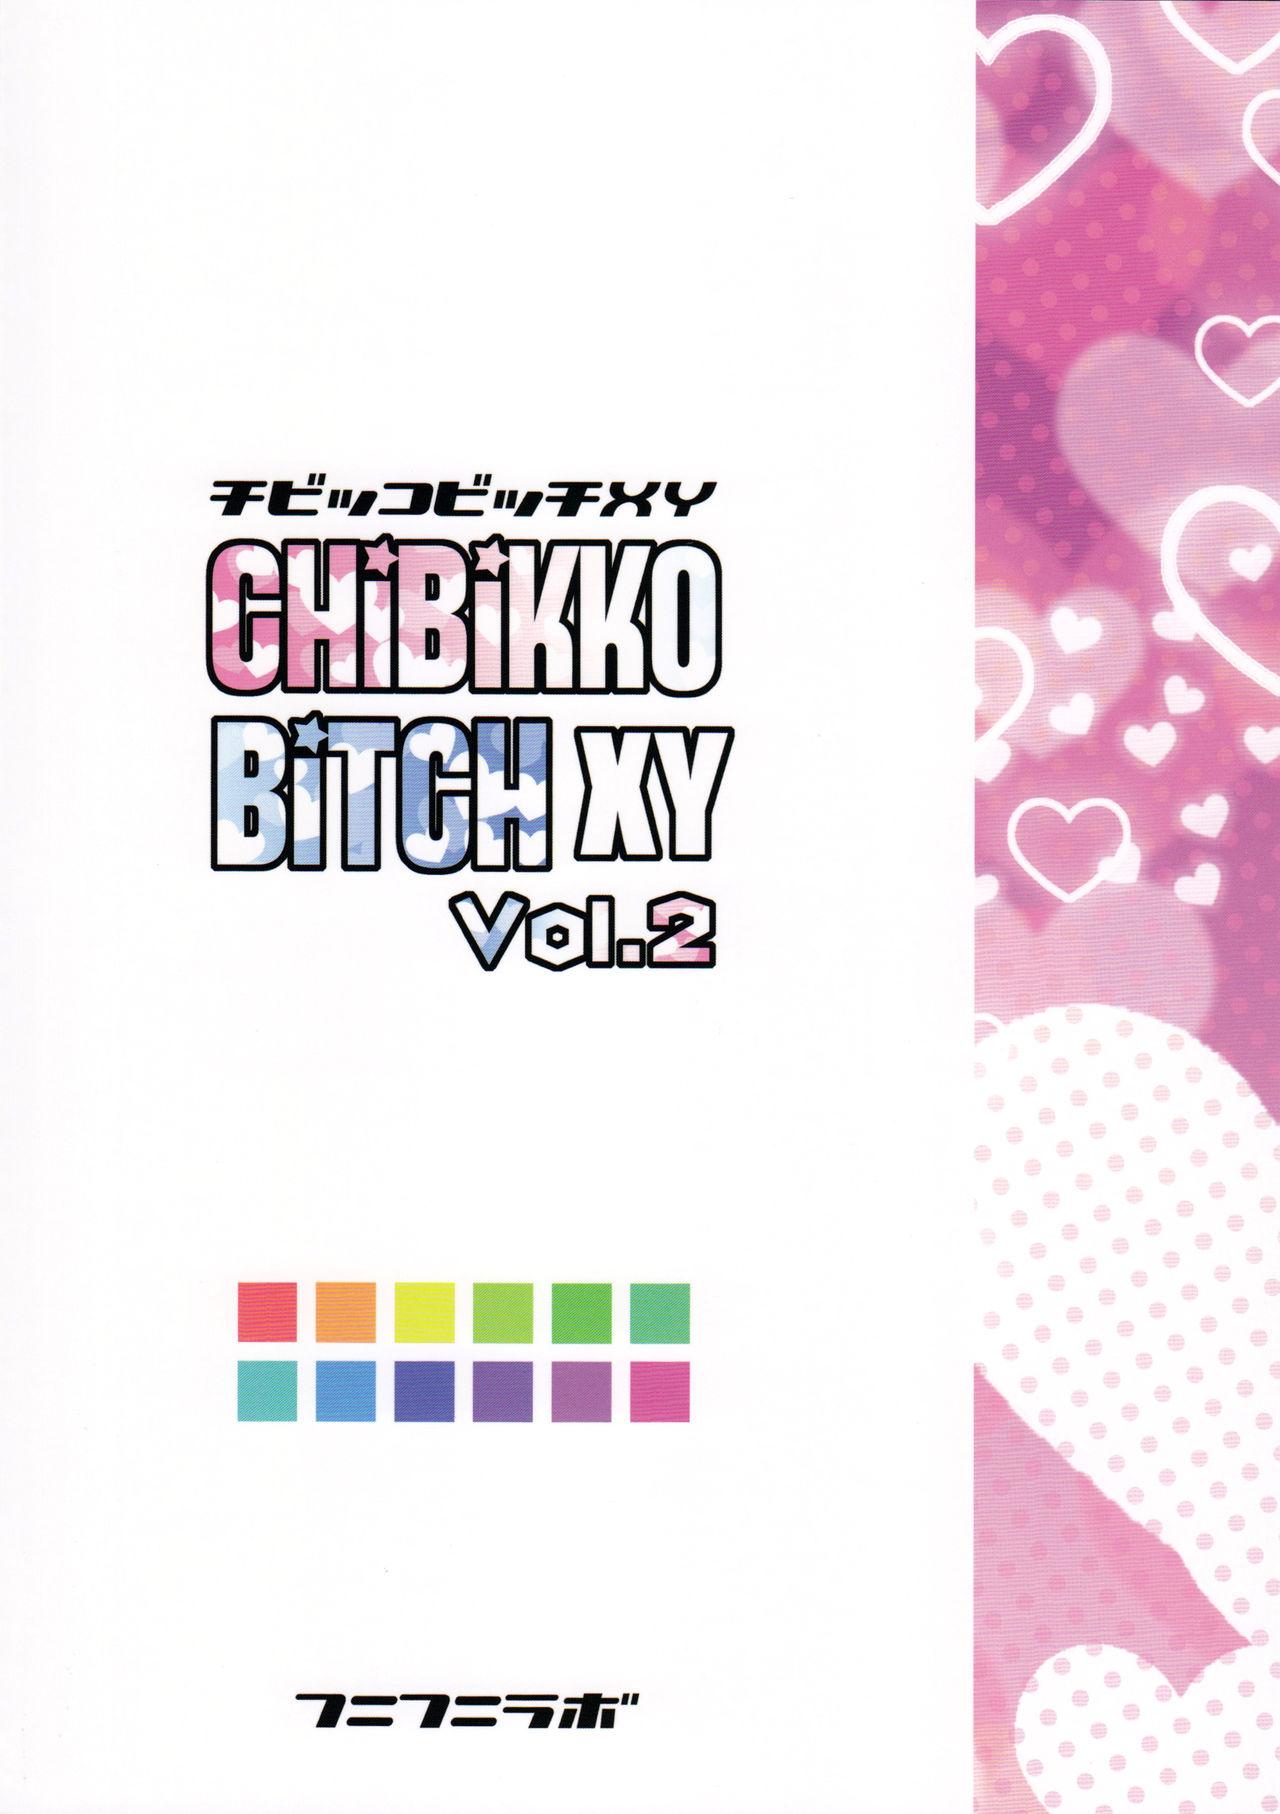 Chibikko Bitch XY 2 24